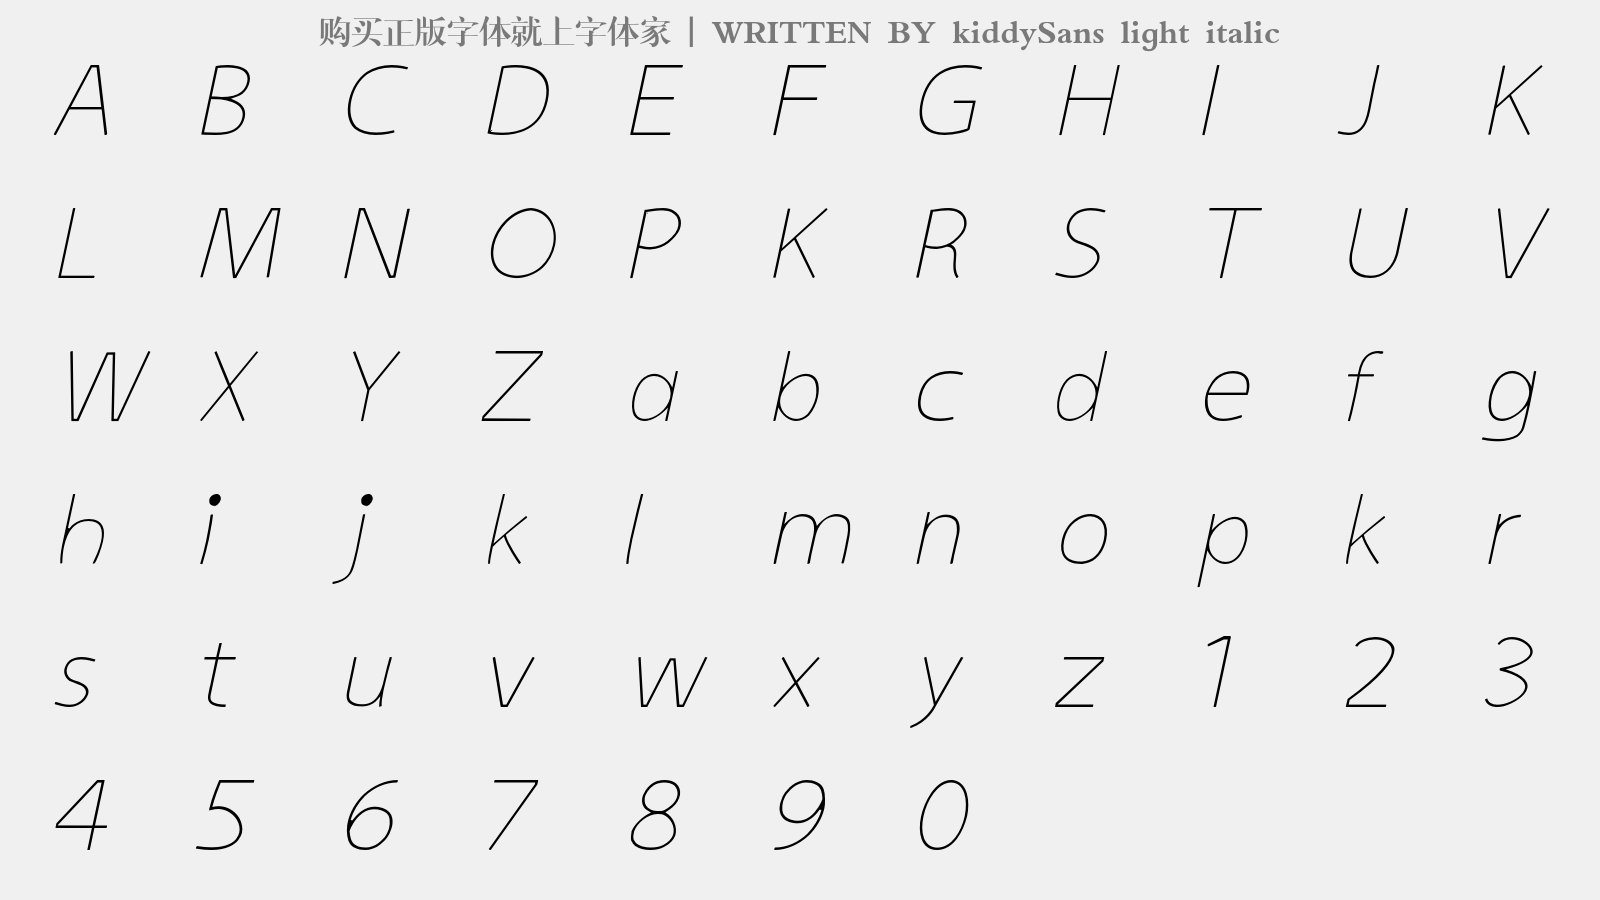 kiddySans light italic - 大写字母/小写字母/数字